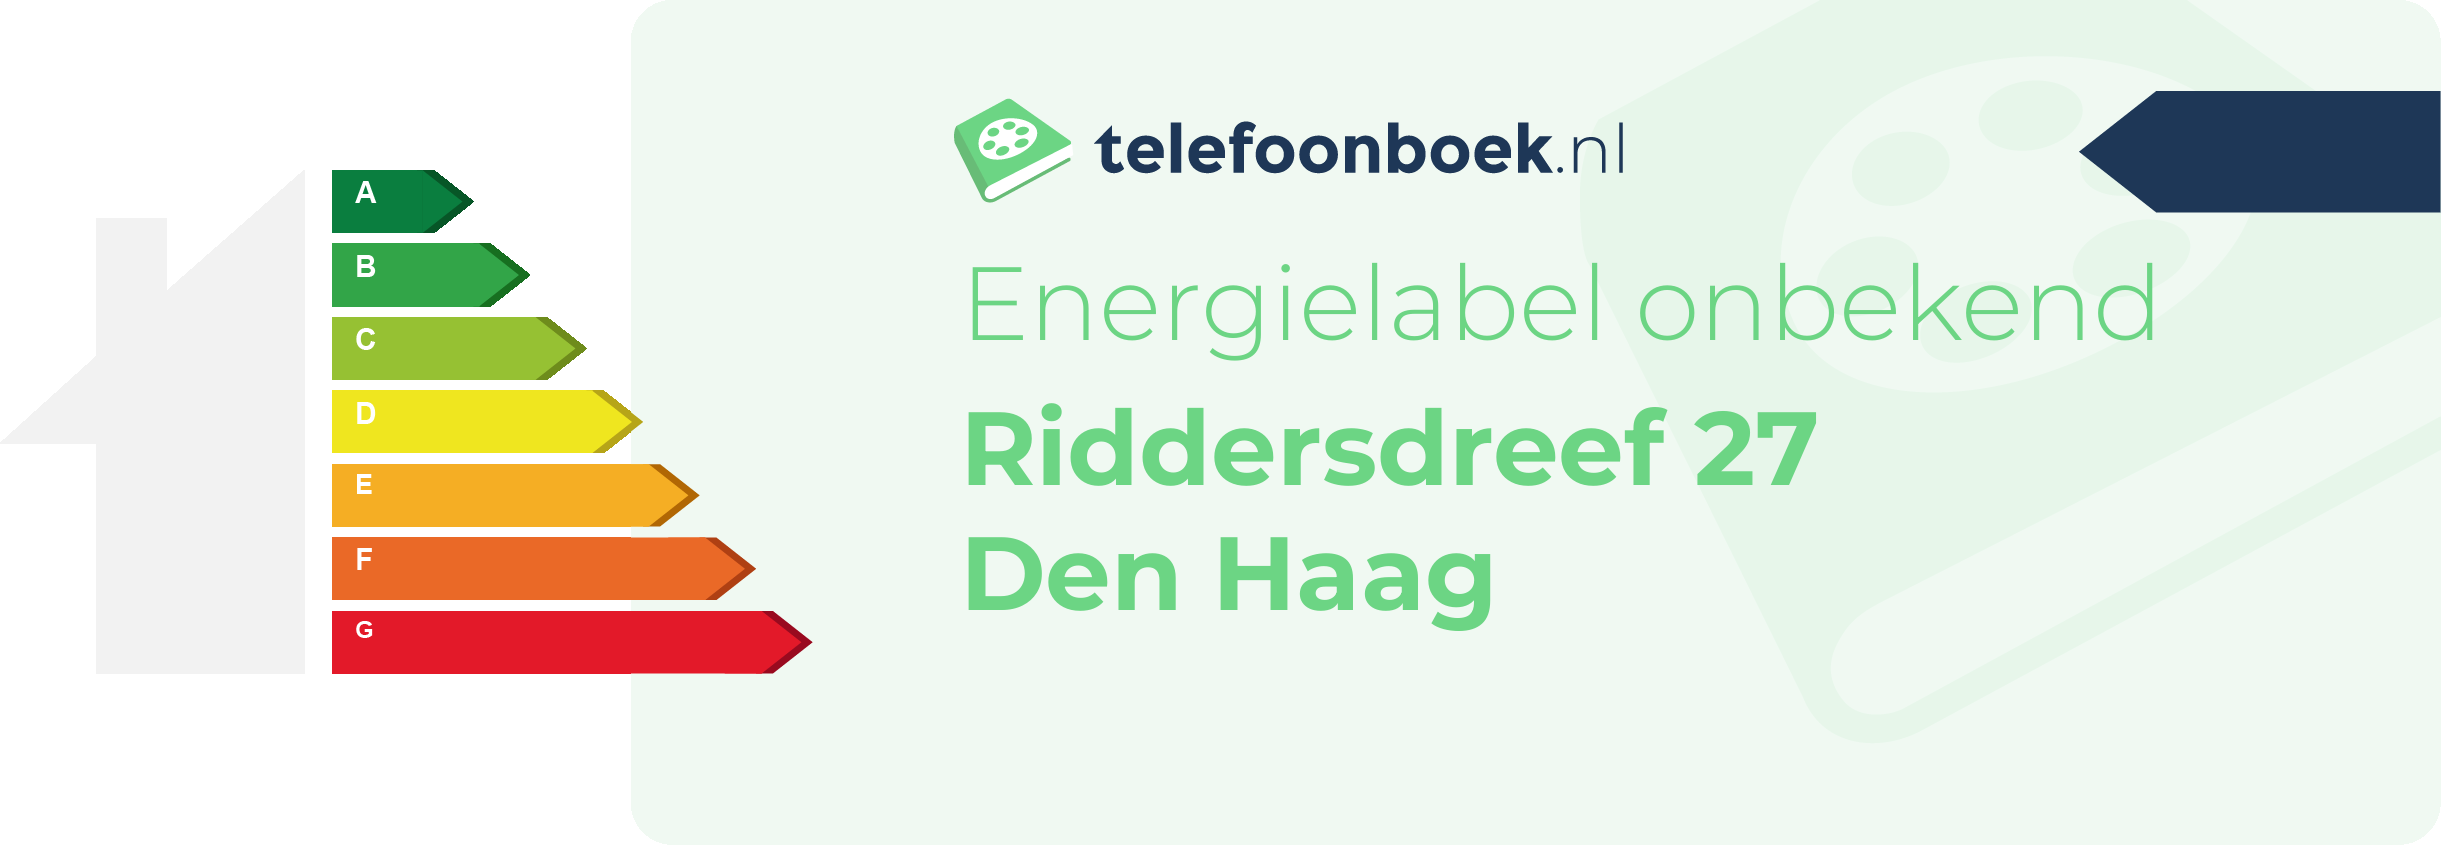 Energielabel Riddersdreef 27 Den Haag